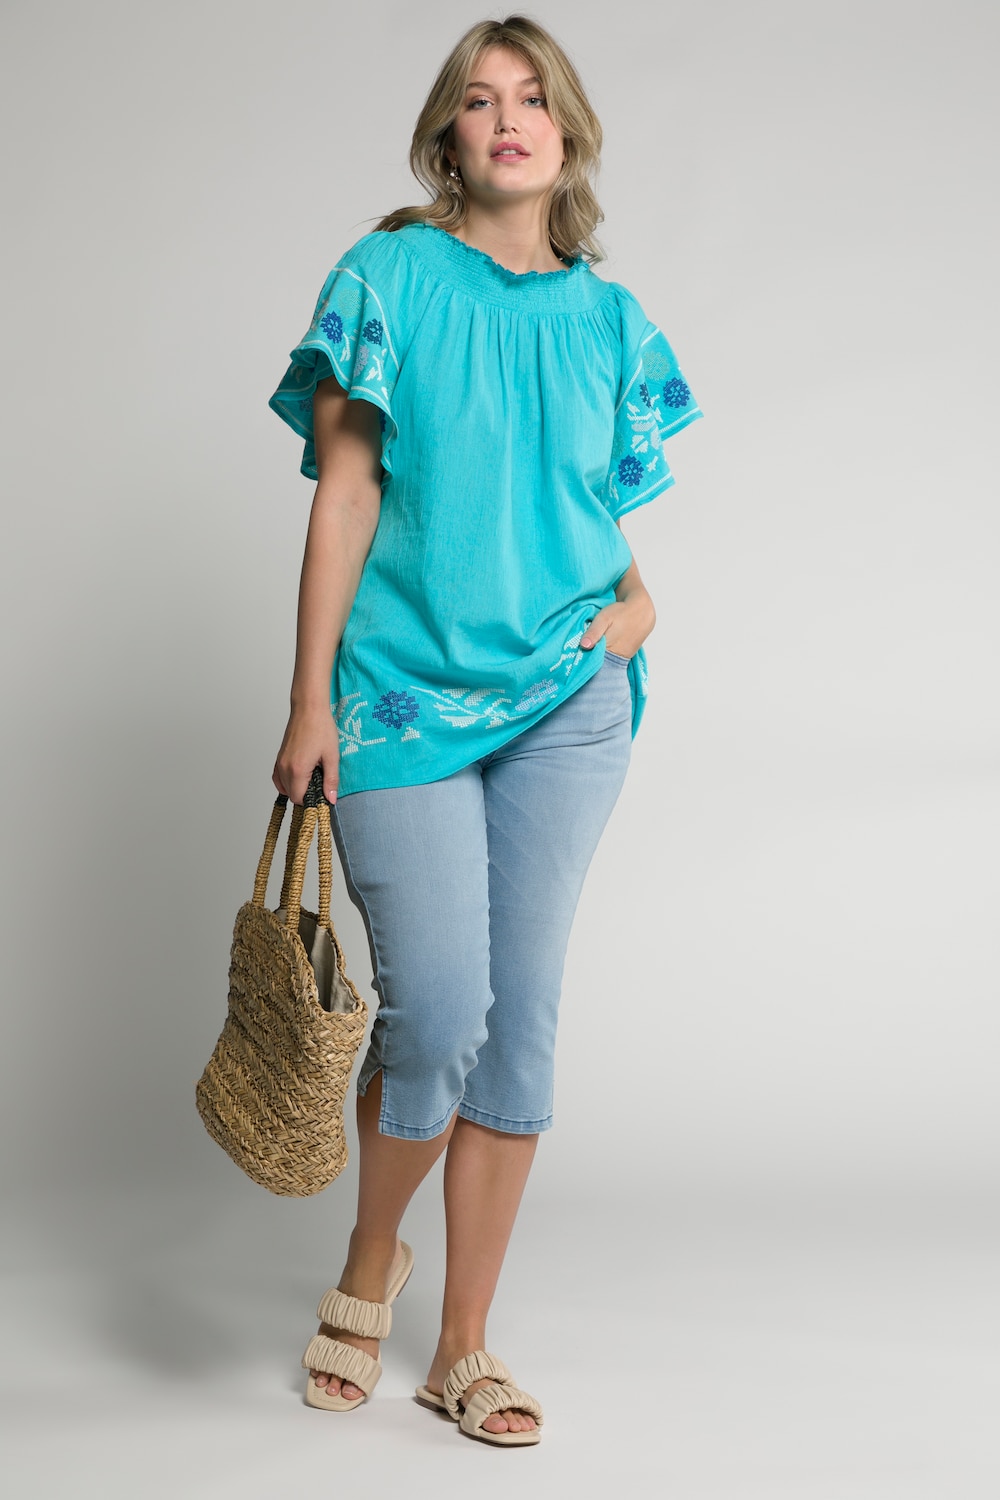 Plus Size Smocked Neck Embroidered Carmen Style Shirt, Woman, turquoise, size: 16/18, cotton/linen, Ulla Popken